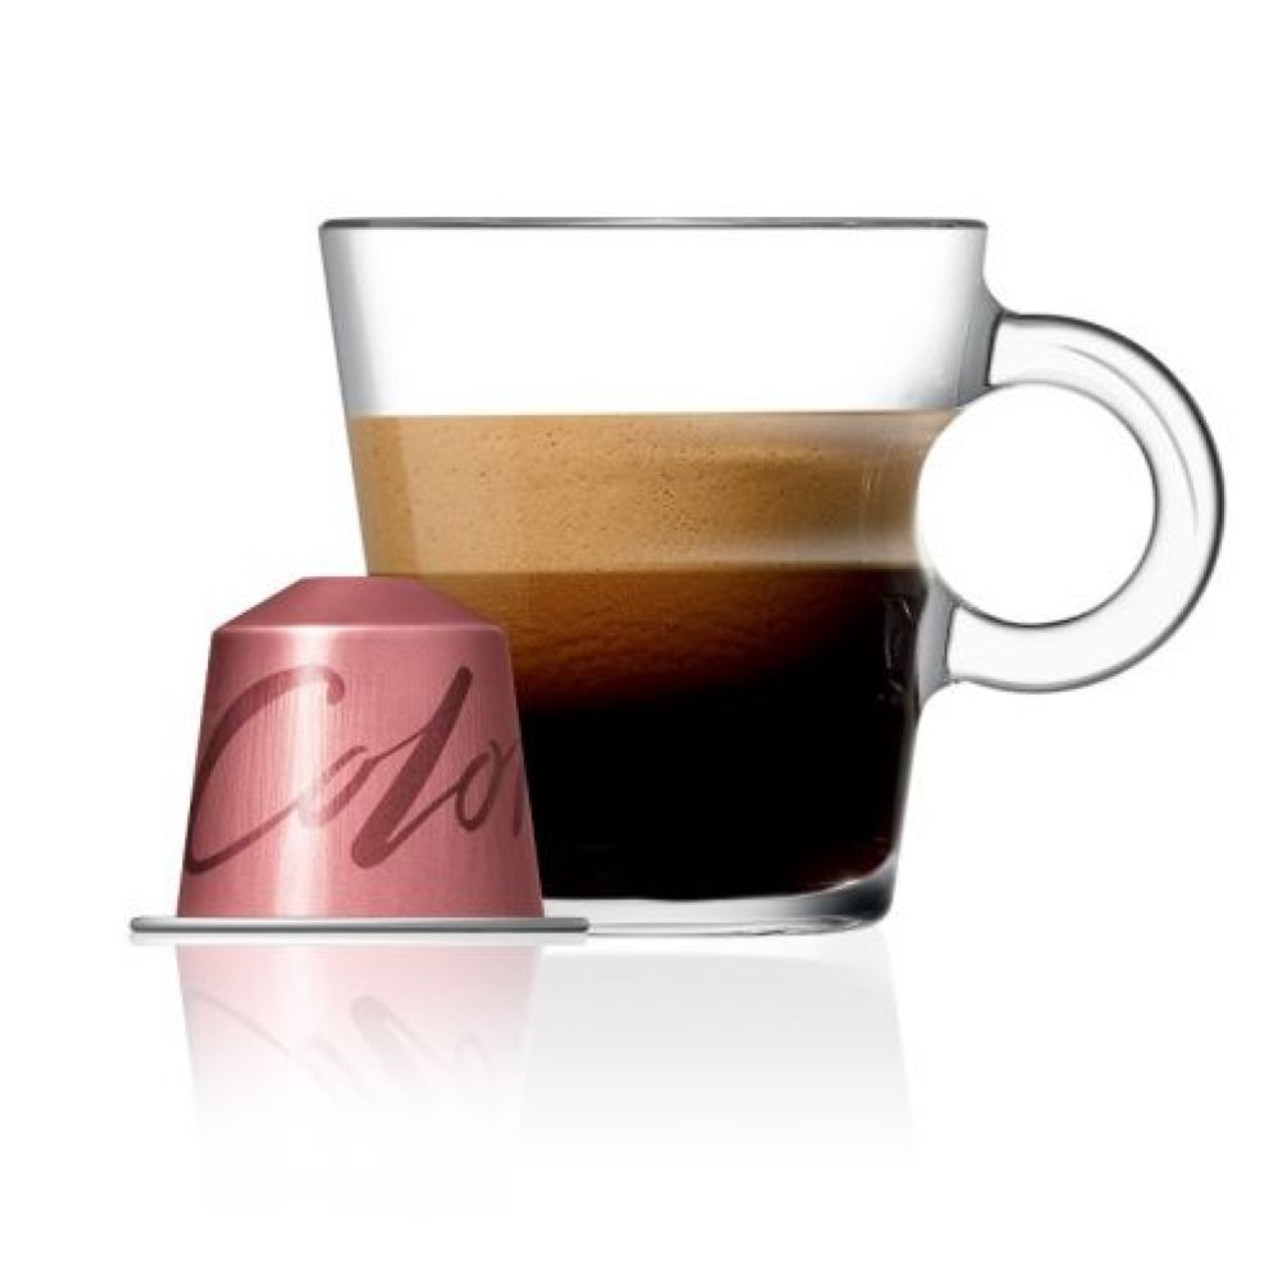 L'OR Espresso Barista Tasses à café Nespresso - 13 Intensité - 40 capsules